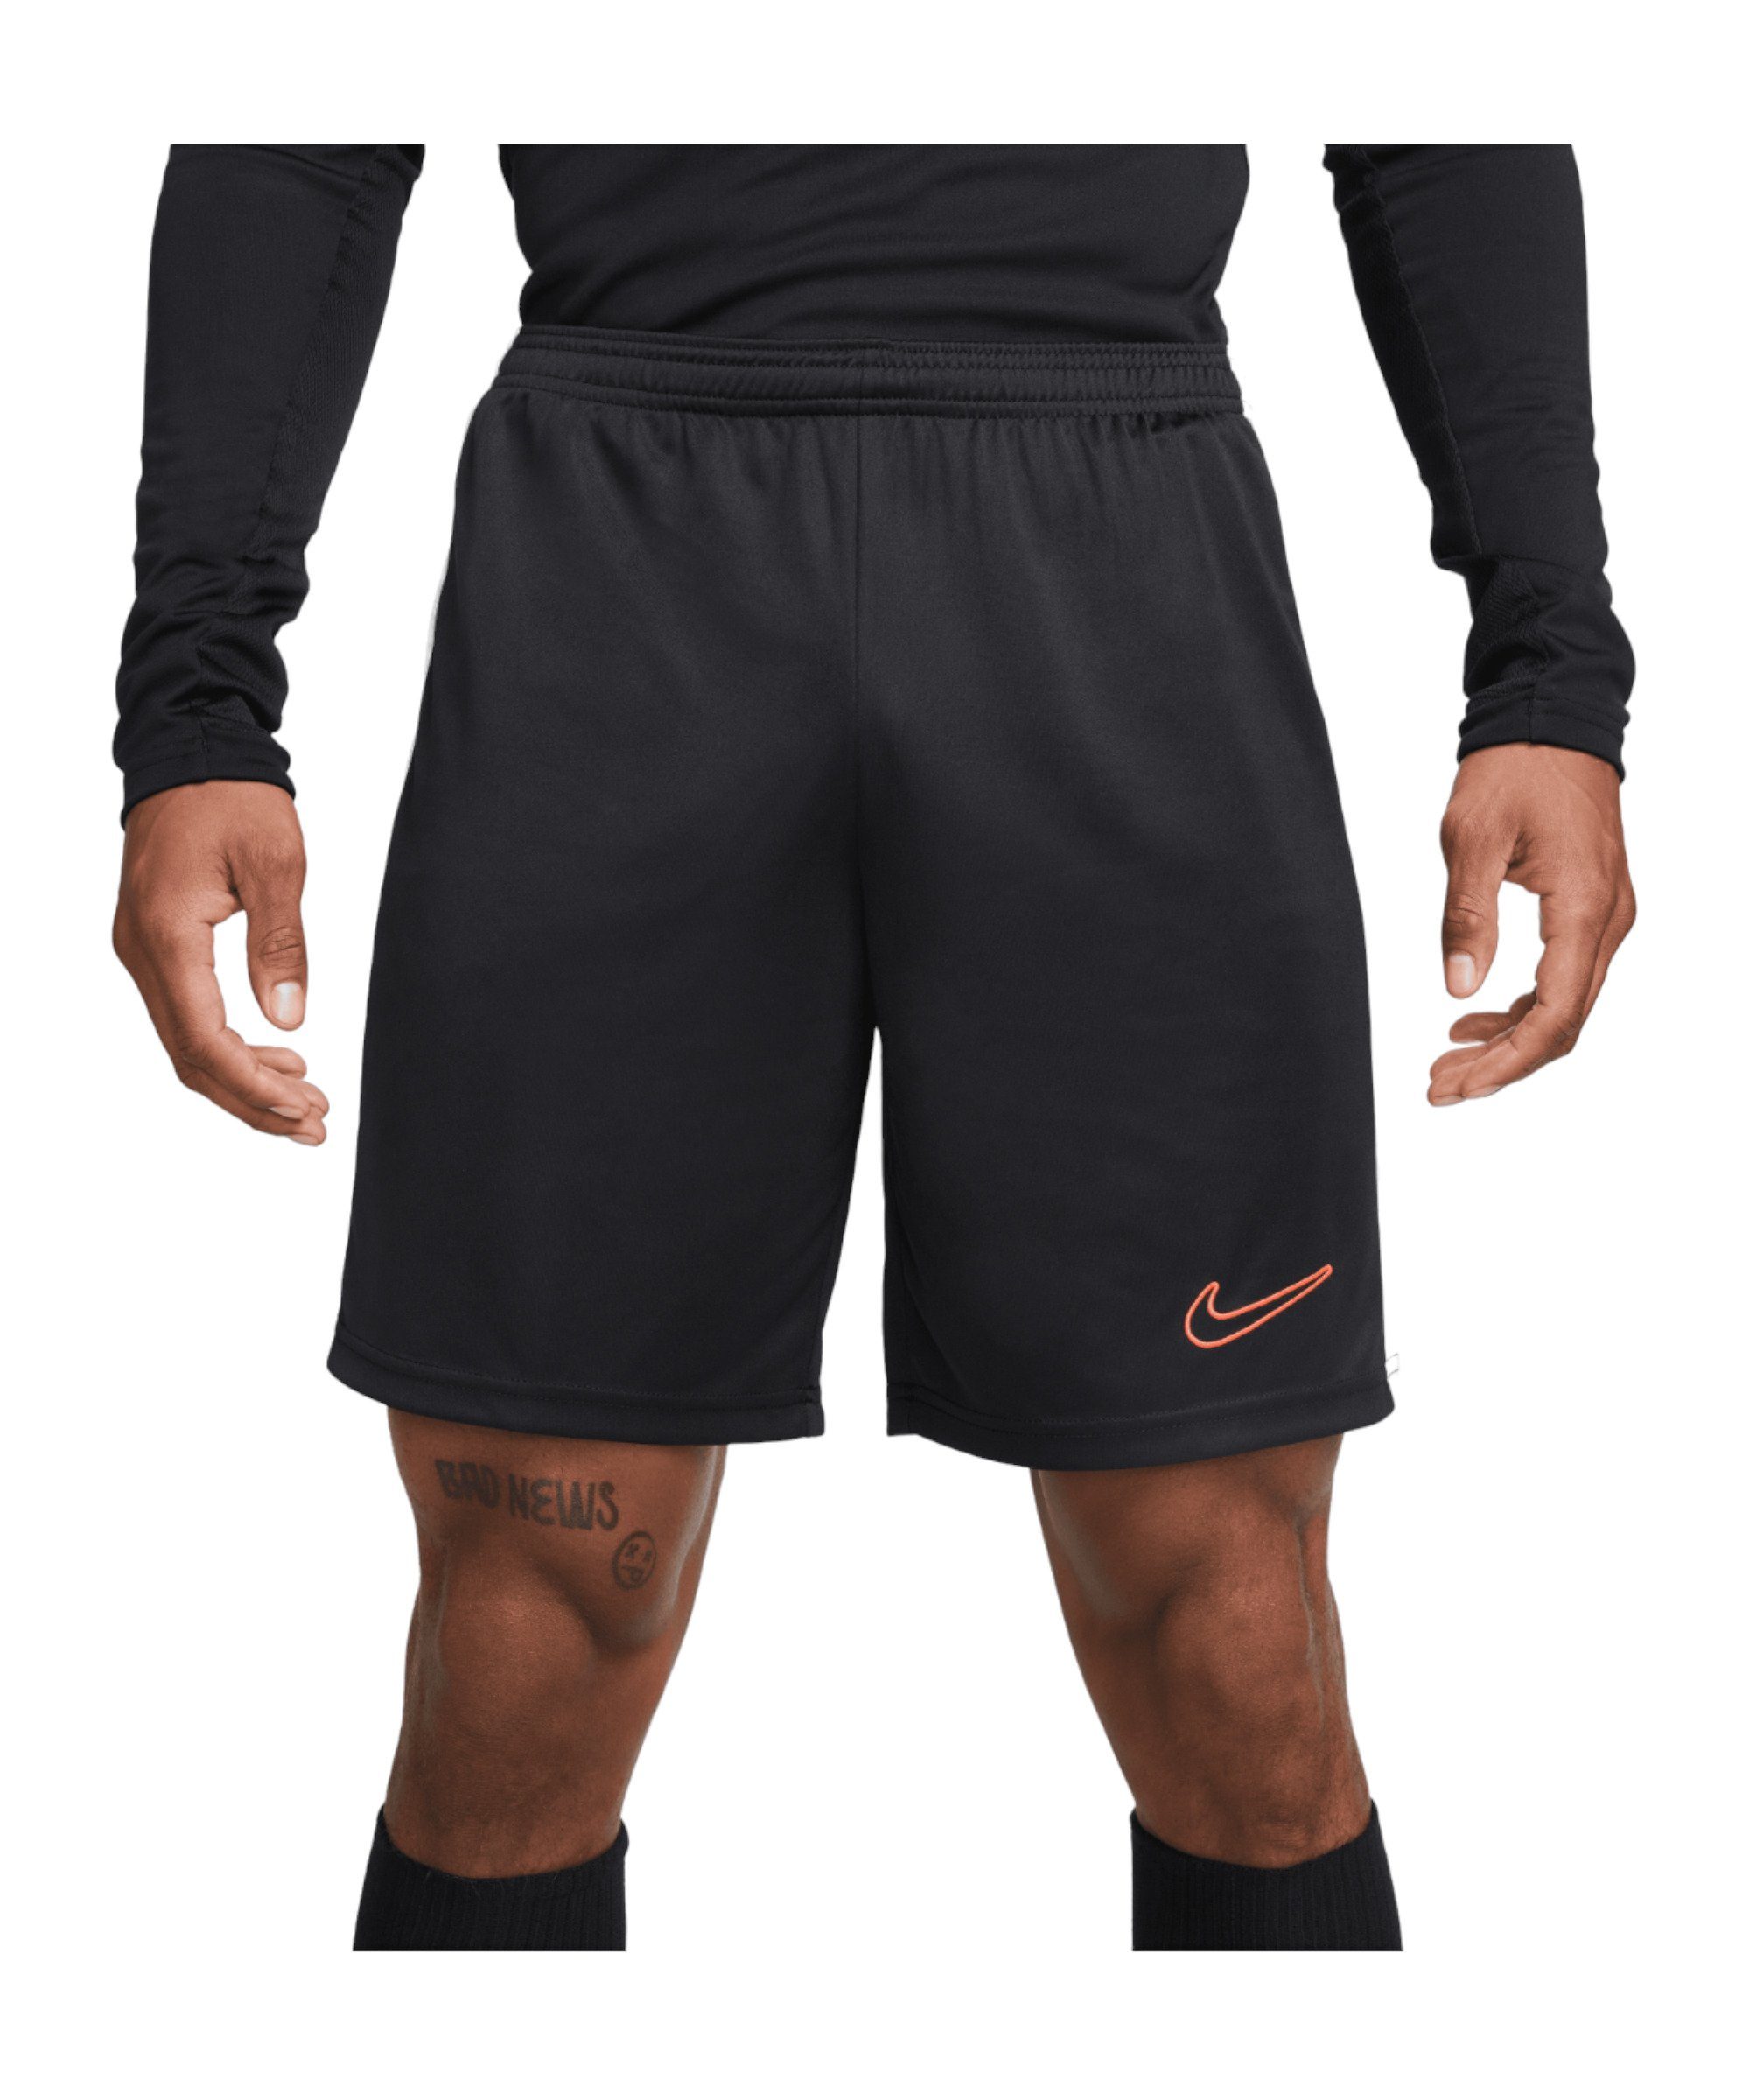 Short Sporthose Nike Academy schwarzweissrot